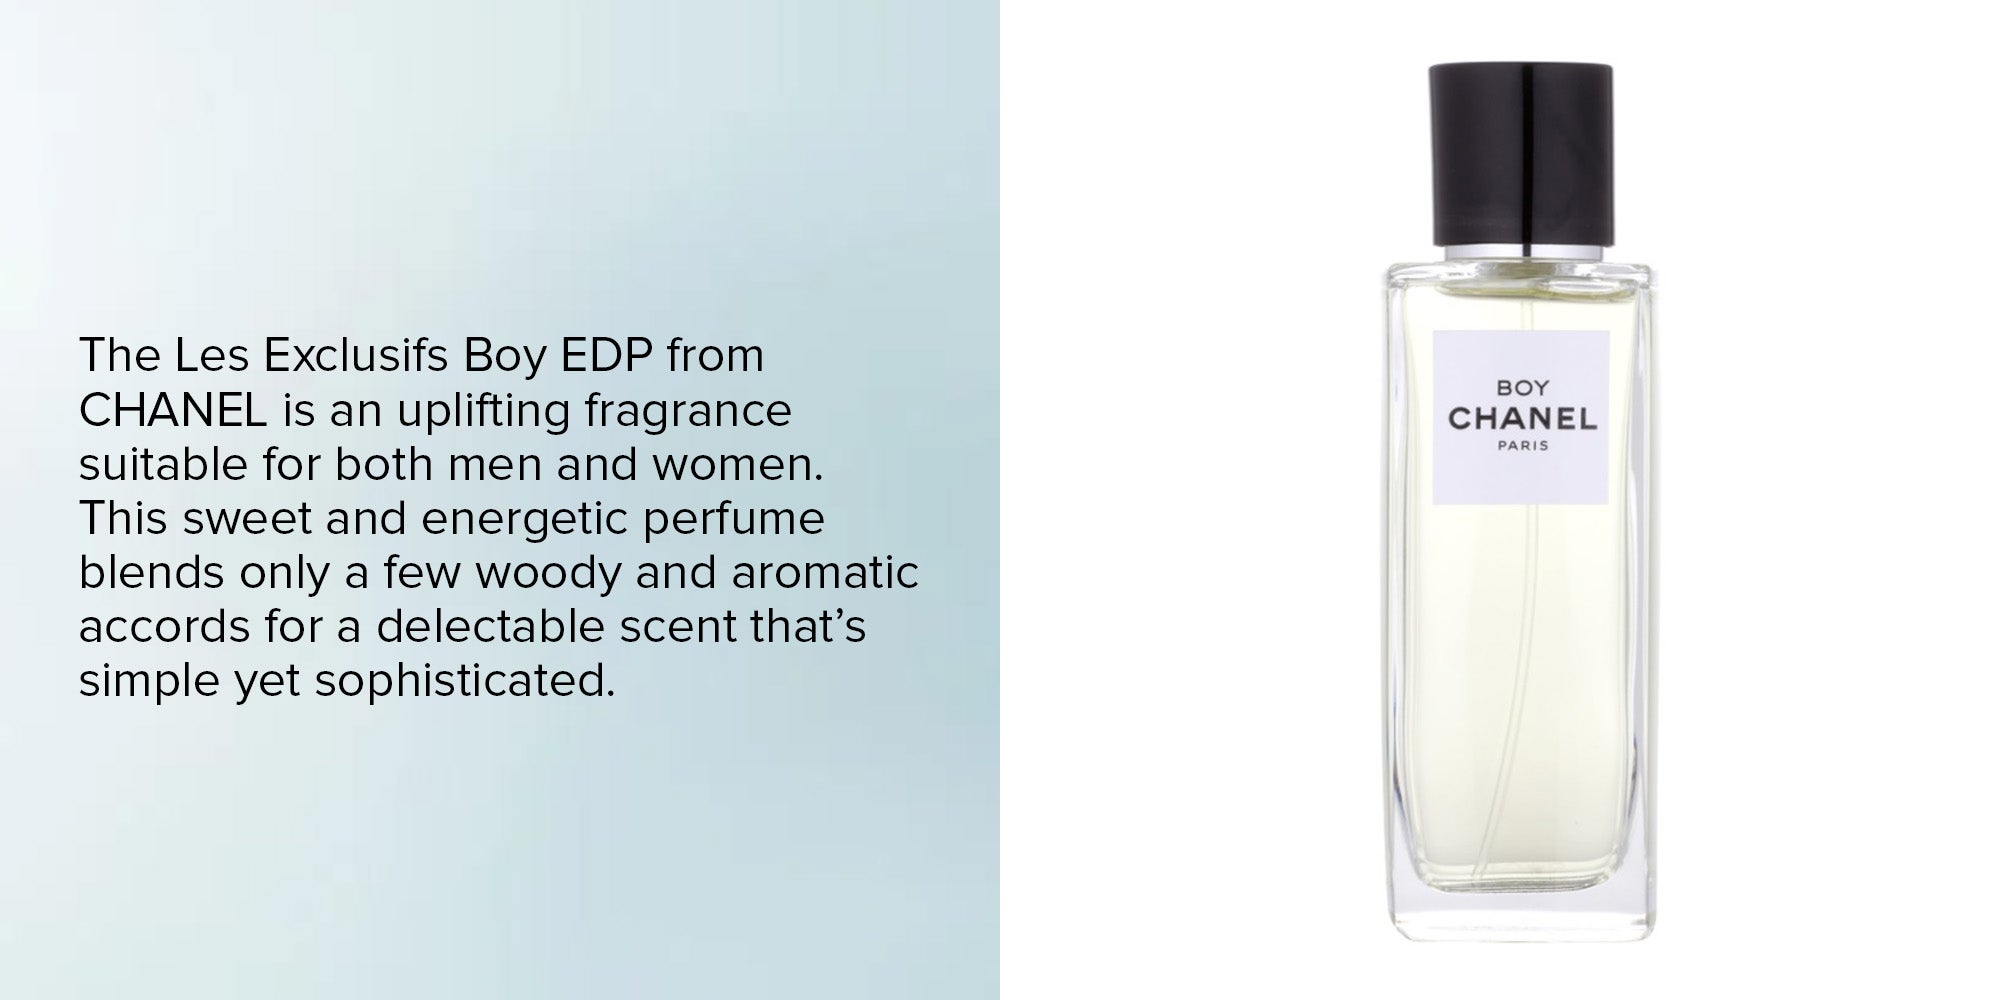 CHANEL BOY Perfume Review - A Les Exclusifs de Chanel Fragrance